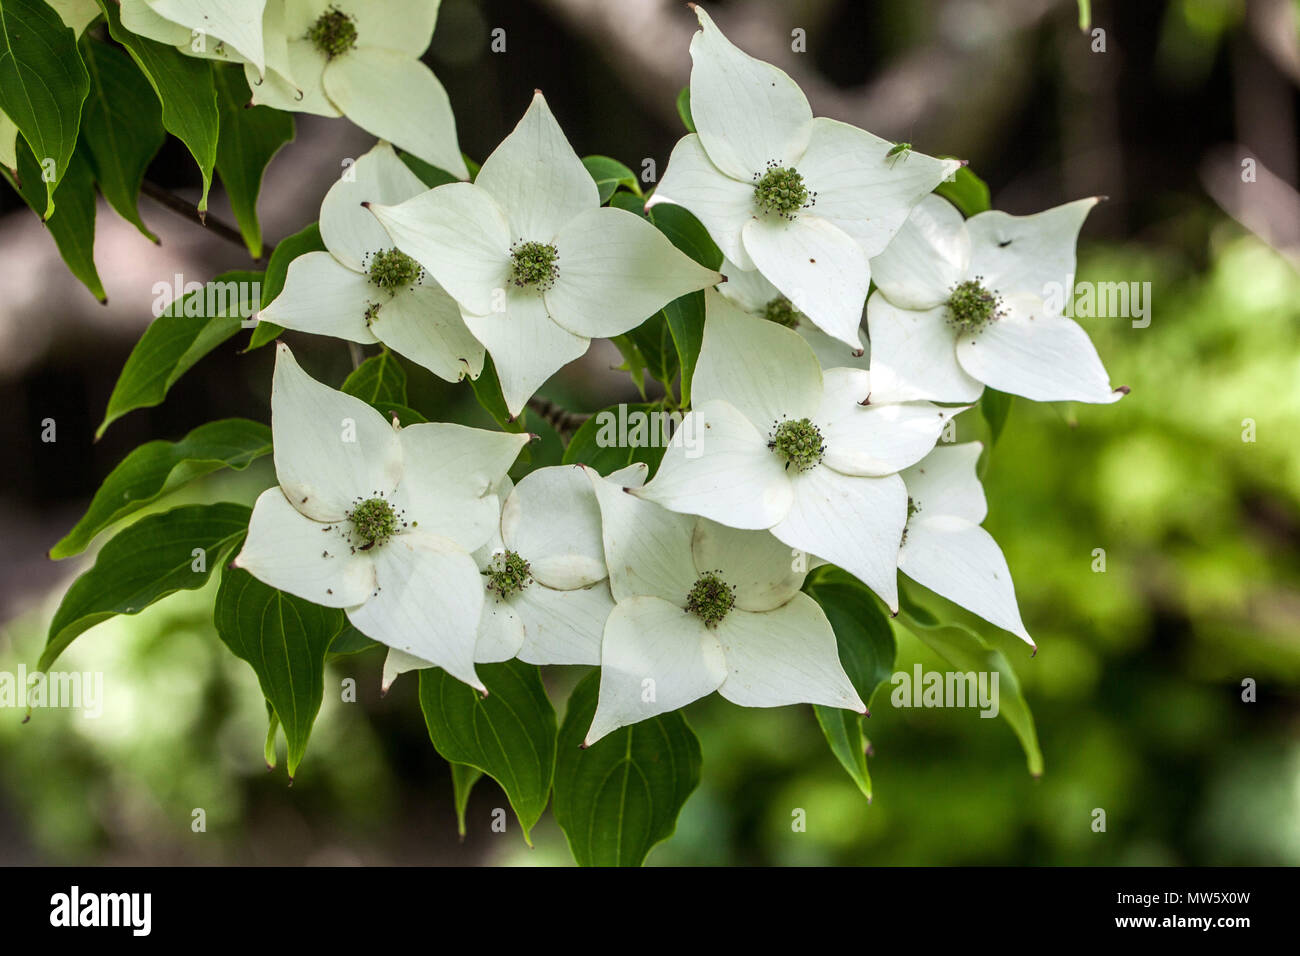 Dogwood, Cornus kousa 'Milky Way' White flowers Close up Blooming Plant in Garden, A greenish tinge Stock Photo